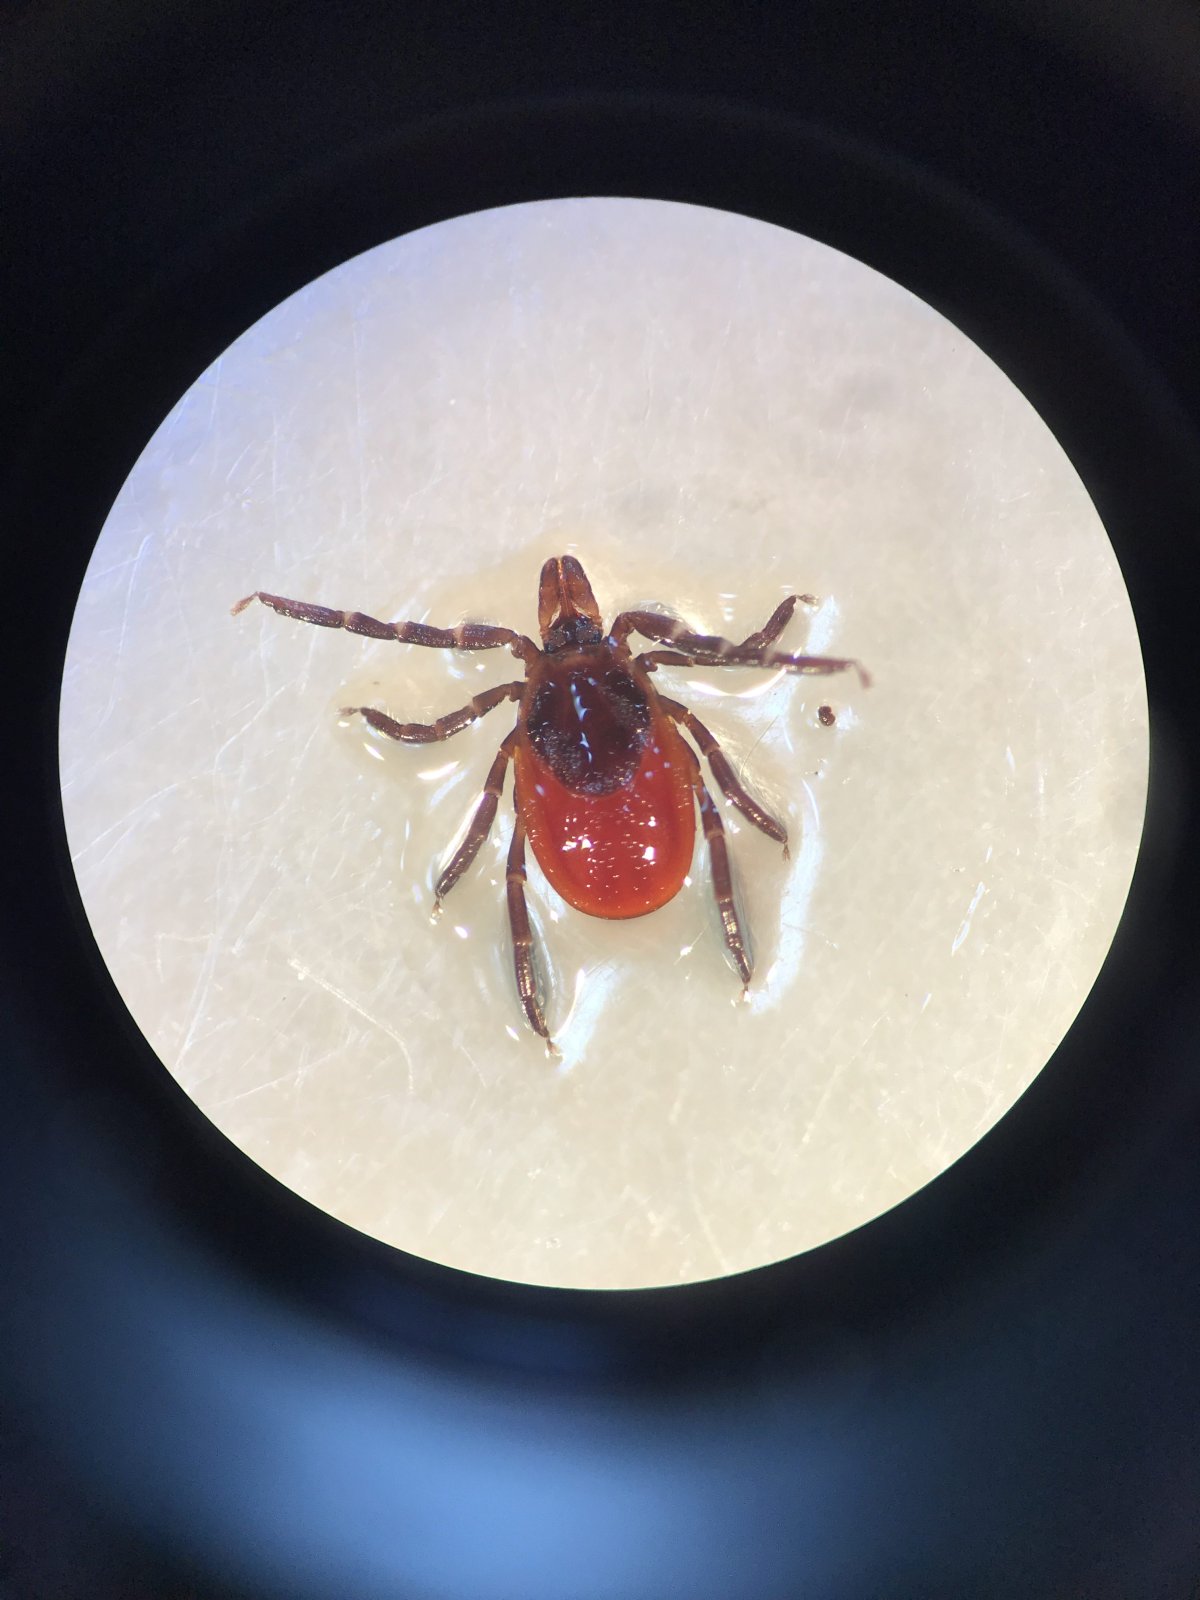 A black-legged tick that has babesia.